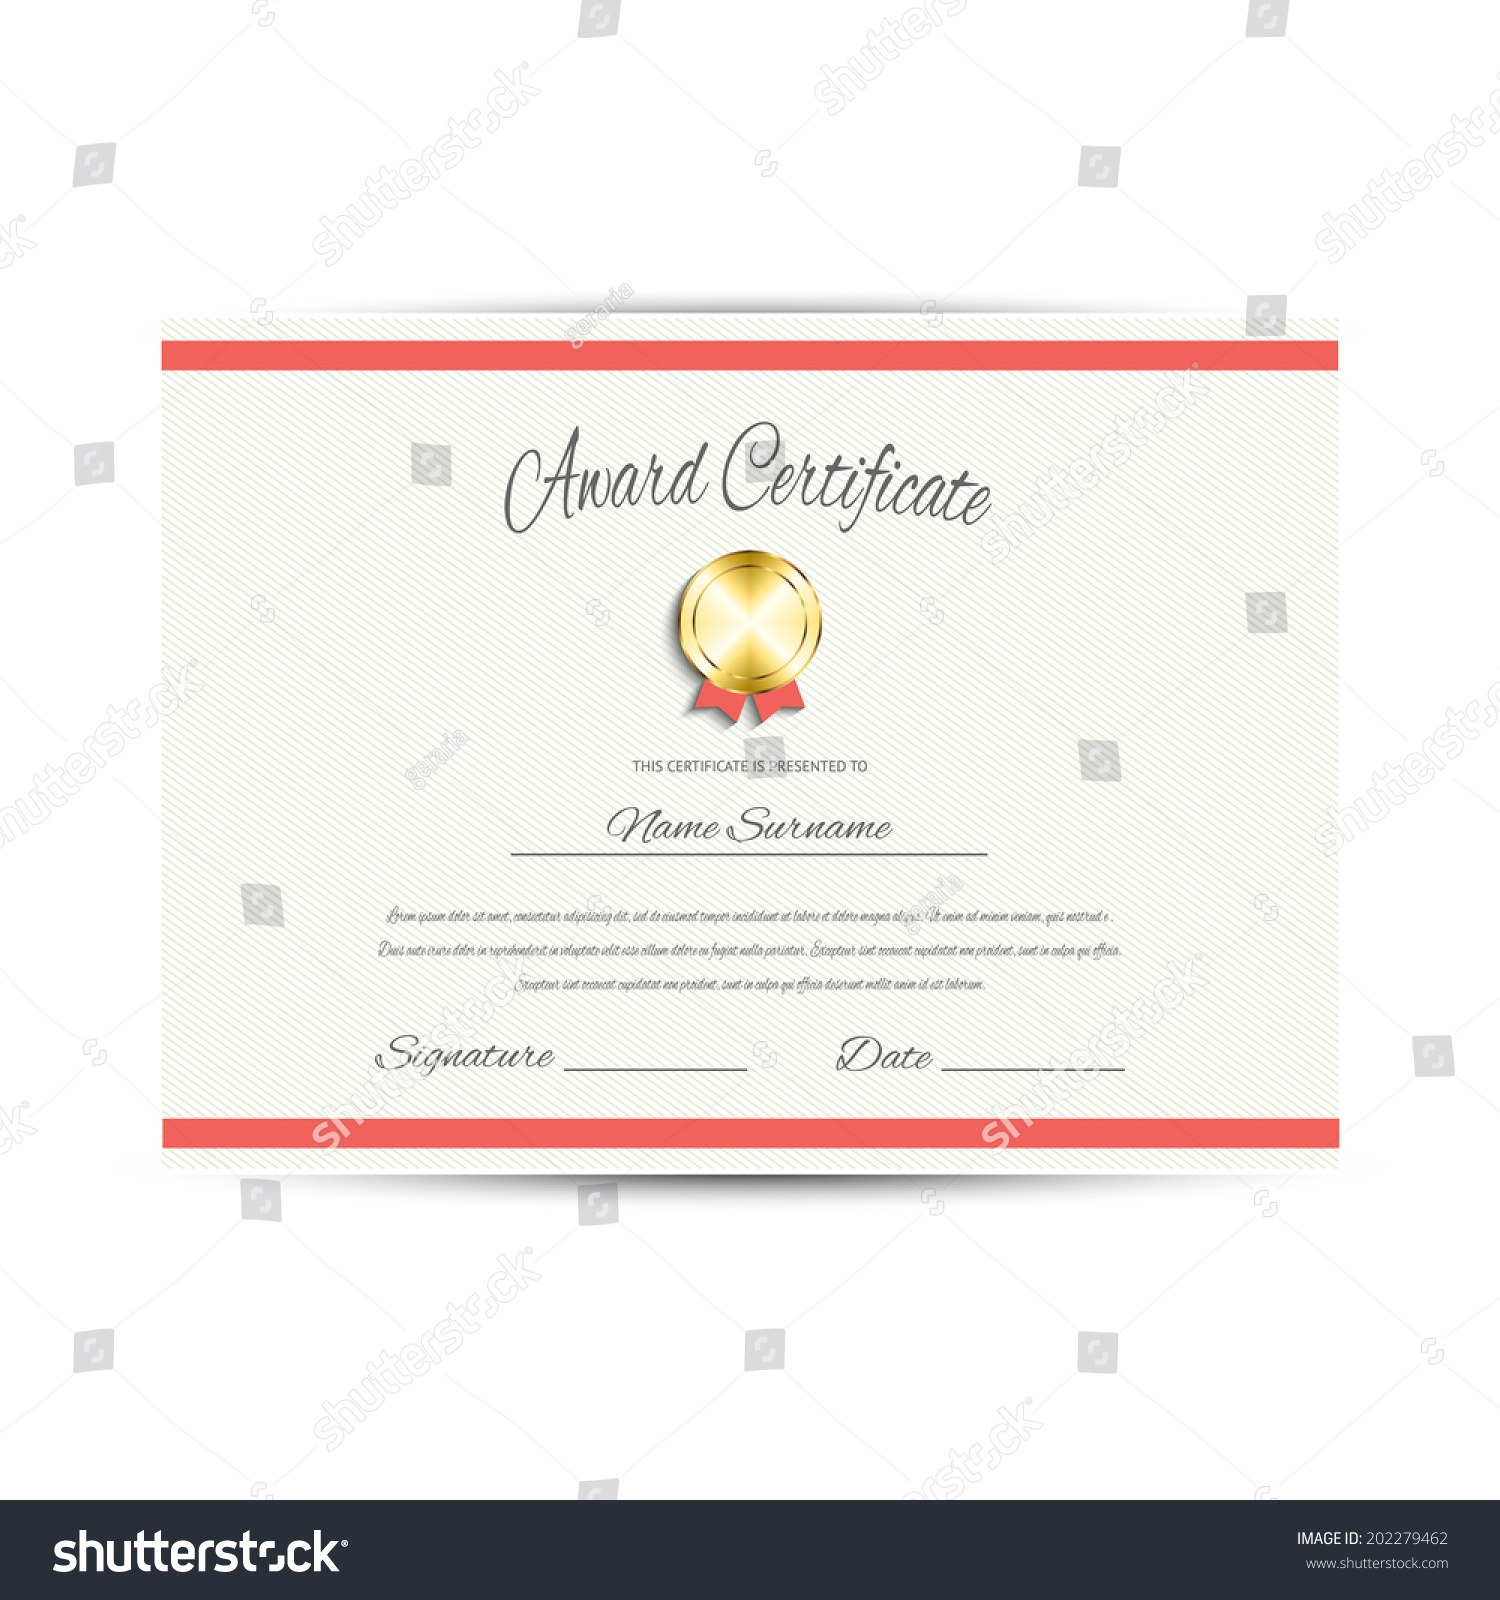 Award Certificate Design Template Stock Vector Royalty Free throughout Award Certificate Design Template